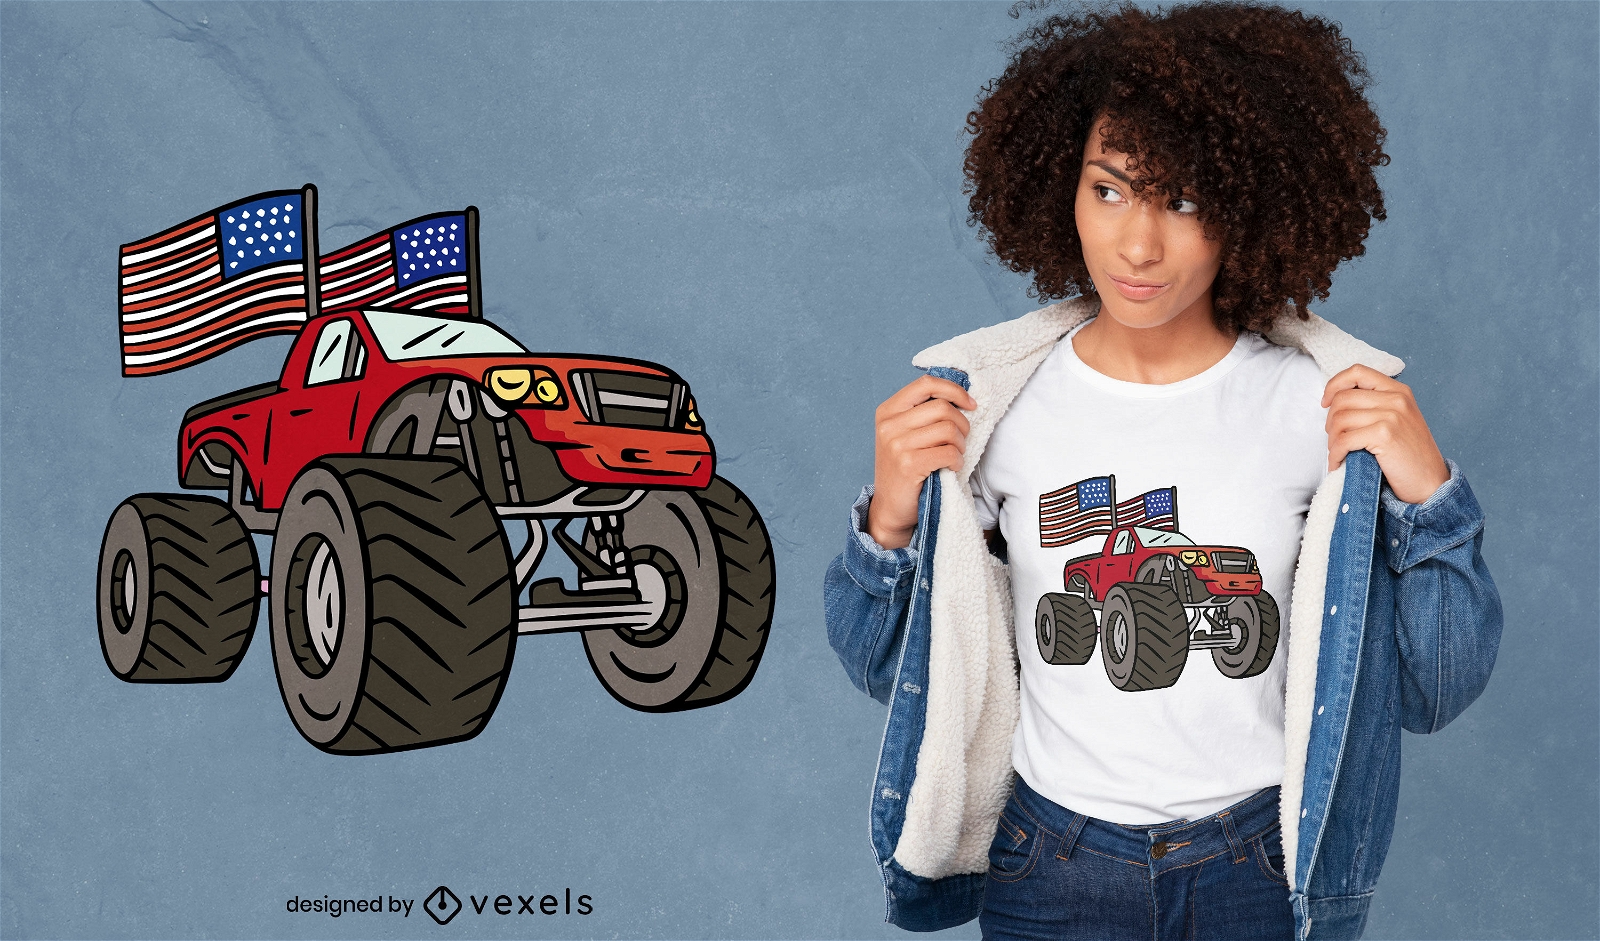 Tolles amerikanisches Truck-T-Shirt-Design